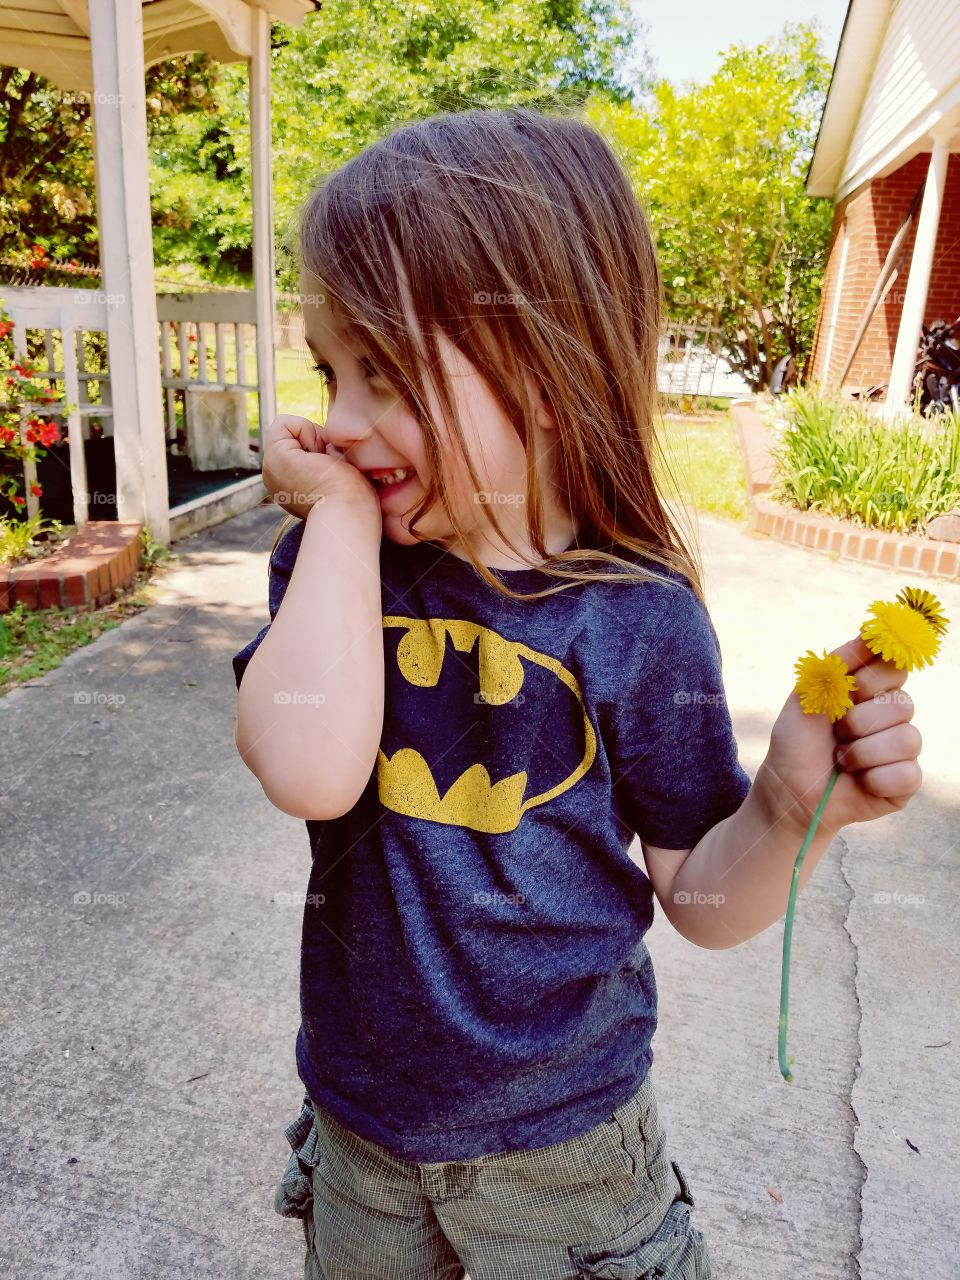 Batman saves the flowers once again!